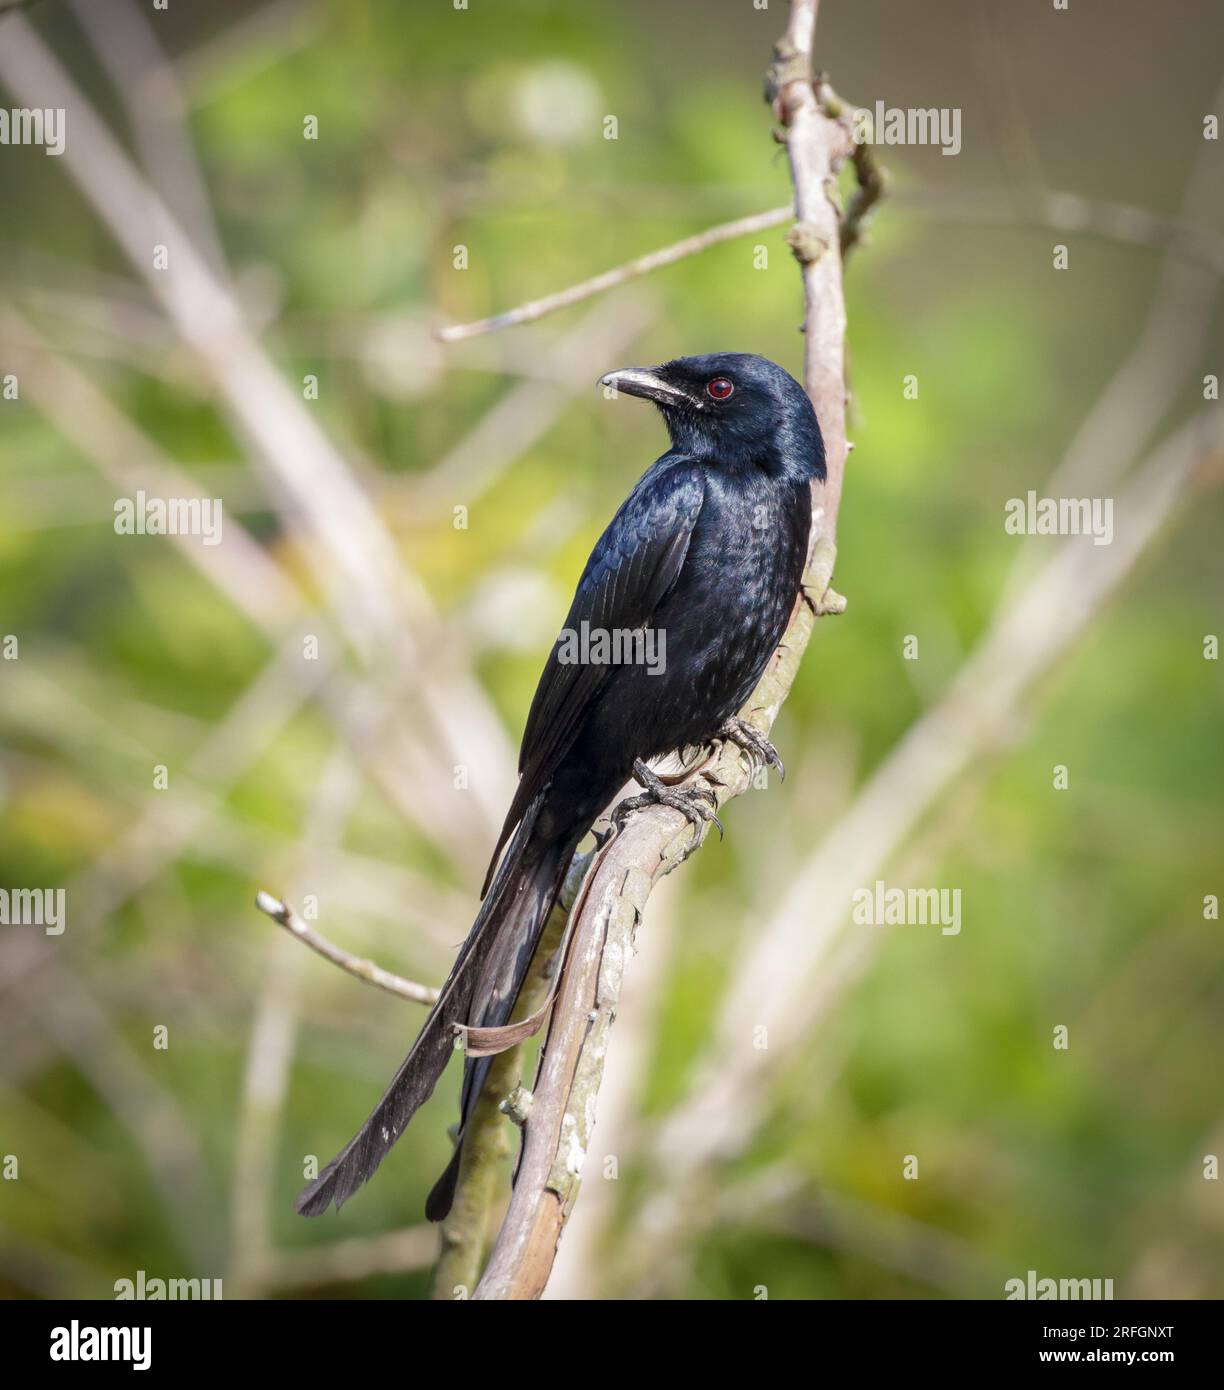 Schwarzer Drongo (Dicrurus macrocercus) ist ein kleiner asiatischer Passerinvogel der Drongo-Familie Dicruridae. Stockfoto